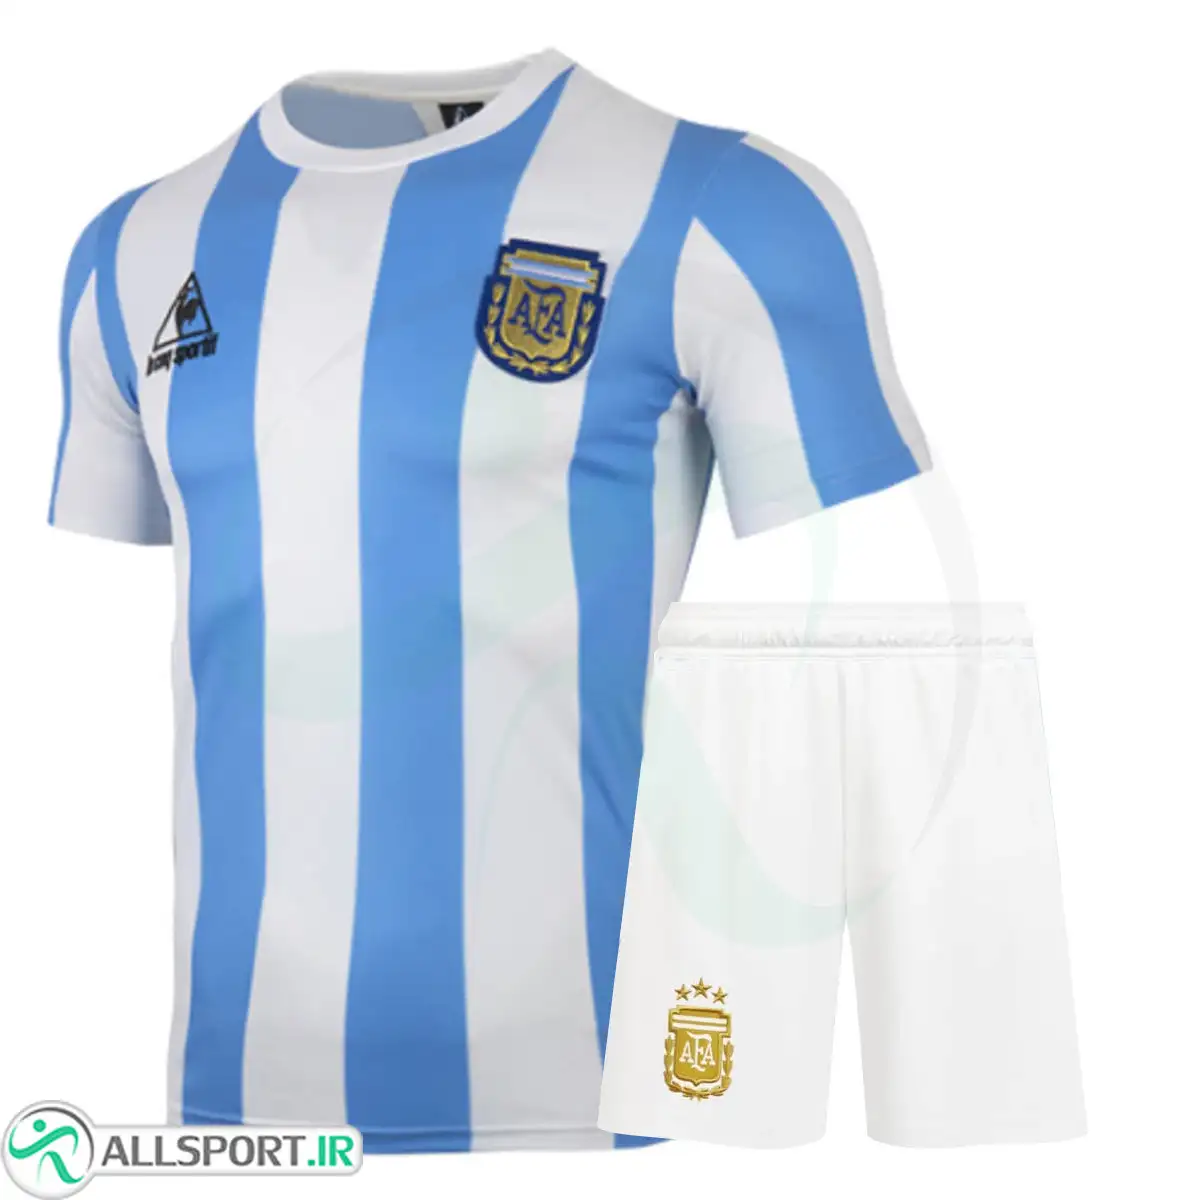 پیراهن شورت  کلاسیک آرژانتین Argentina Classic 1986 Kit 11126312